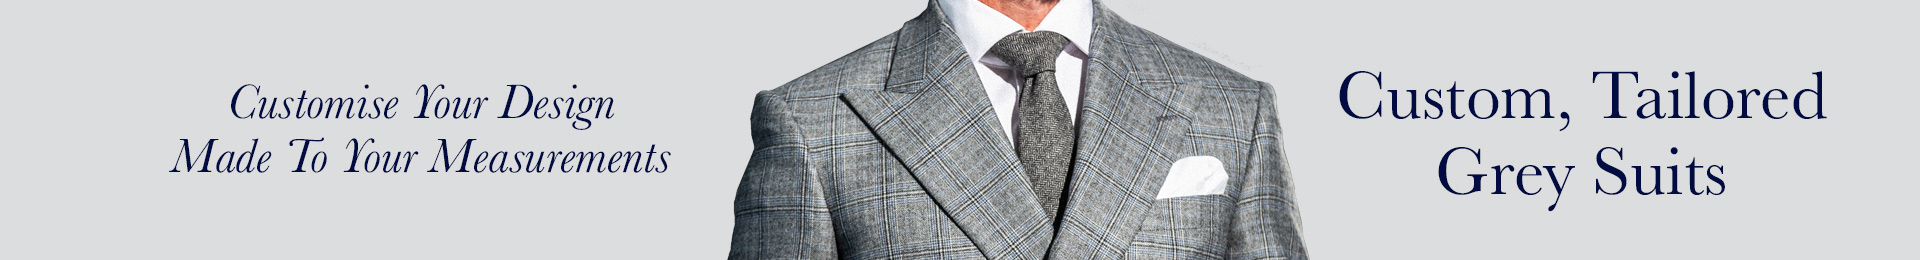 Custom Tailored Grey Suits